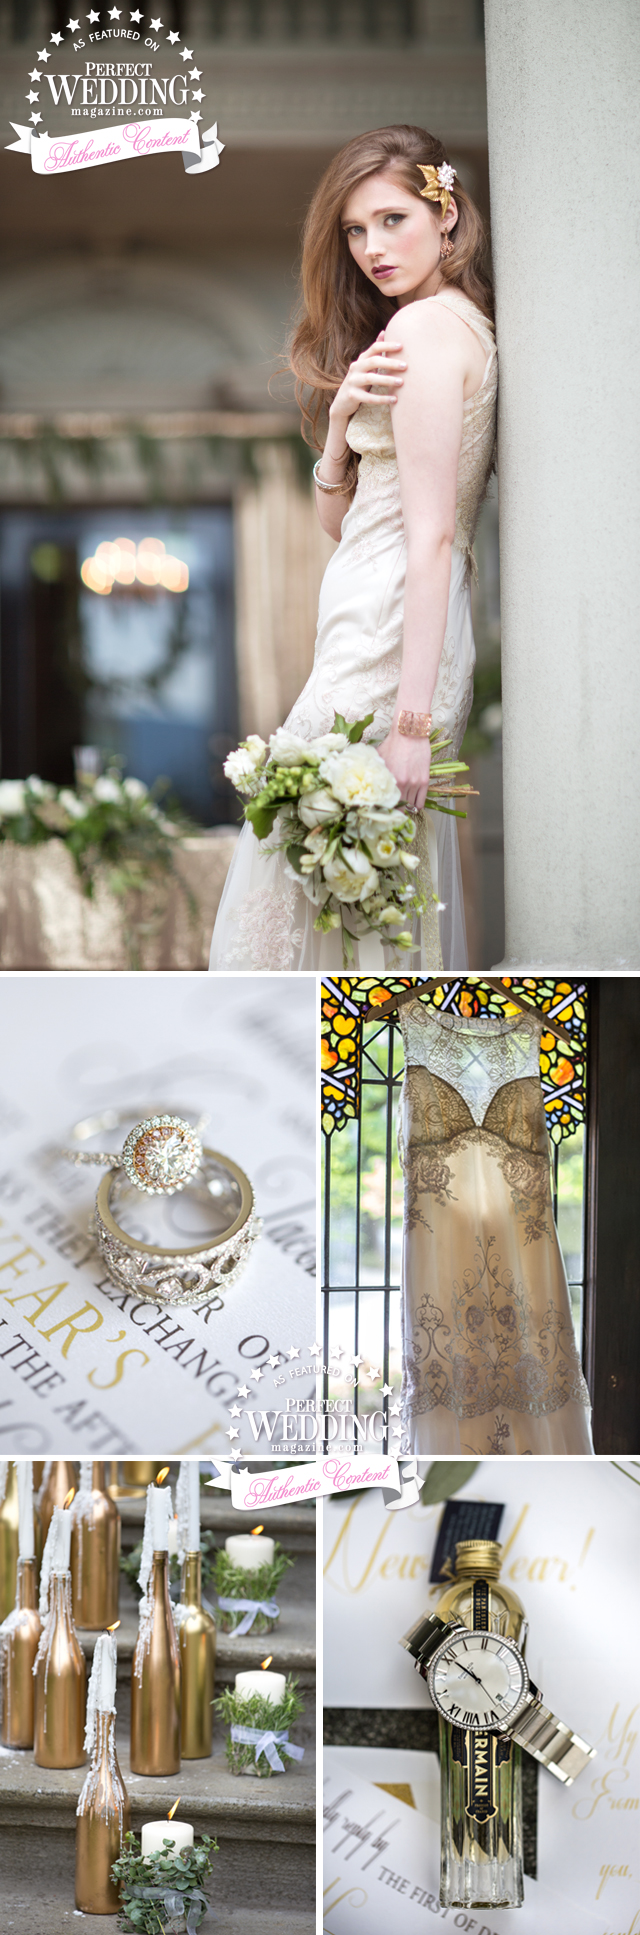 Perfect Wedding Magazine, Perfect Wedding Blog, Claire Pettibone, New Years wedding Inspiration, Wedding décor, Wedding Flowers, Tiffany & Co.